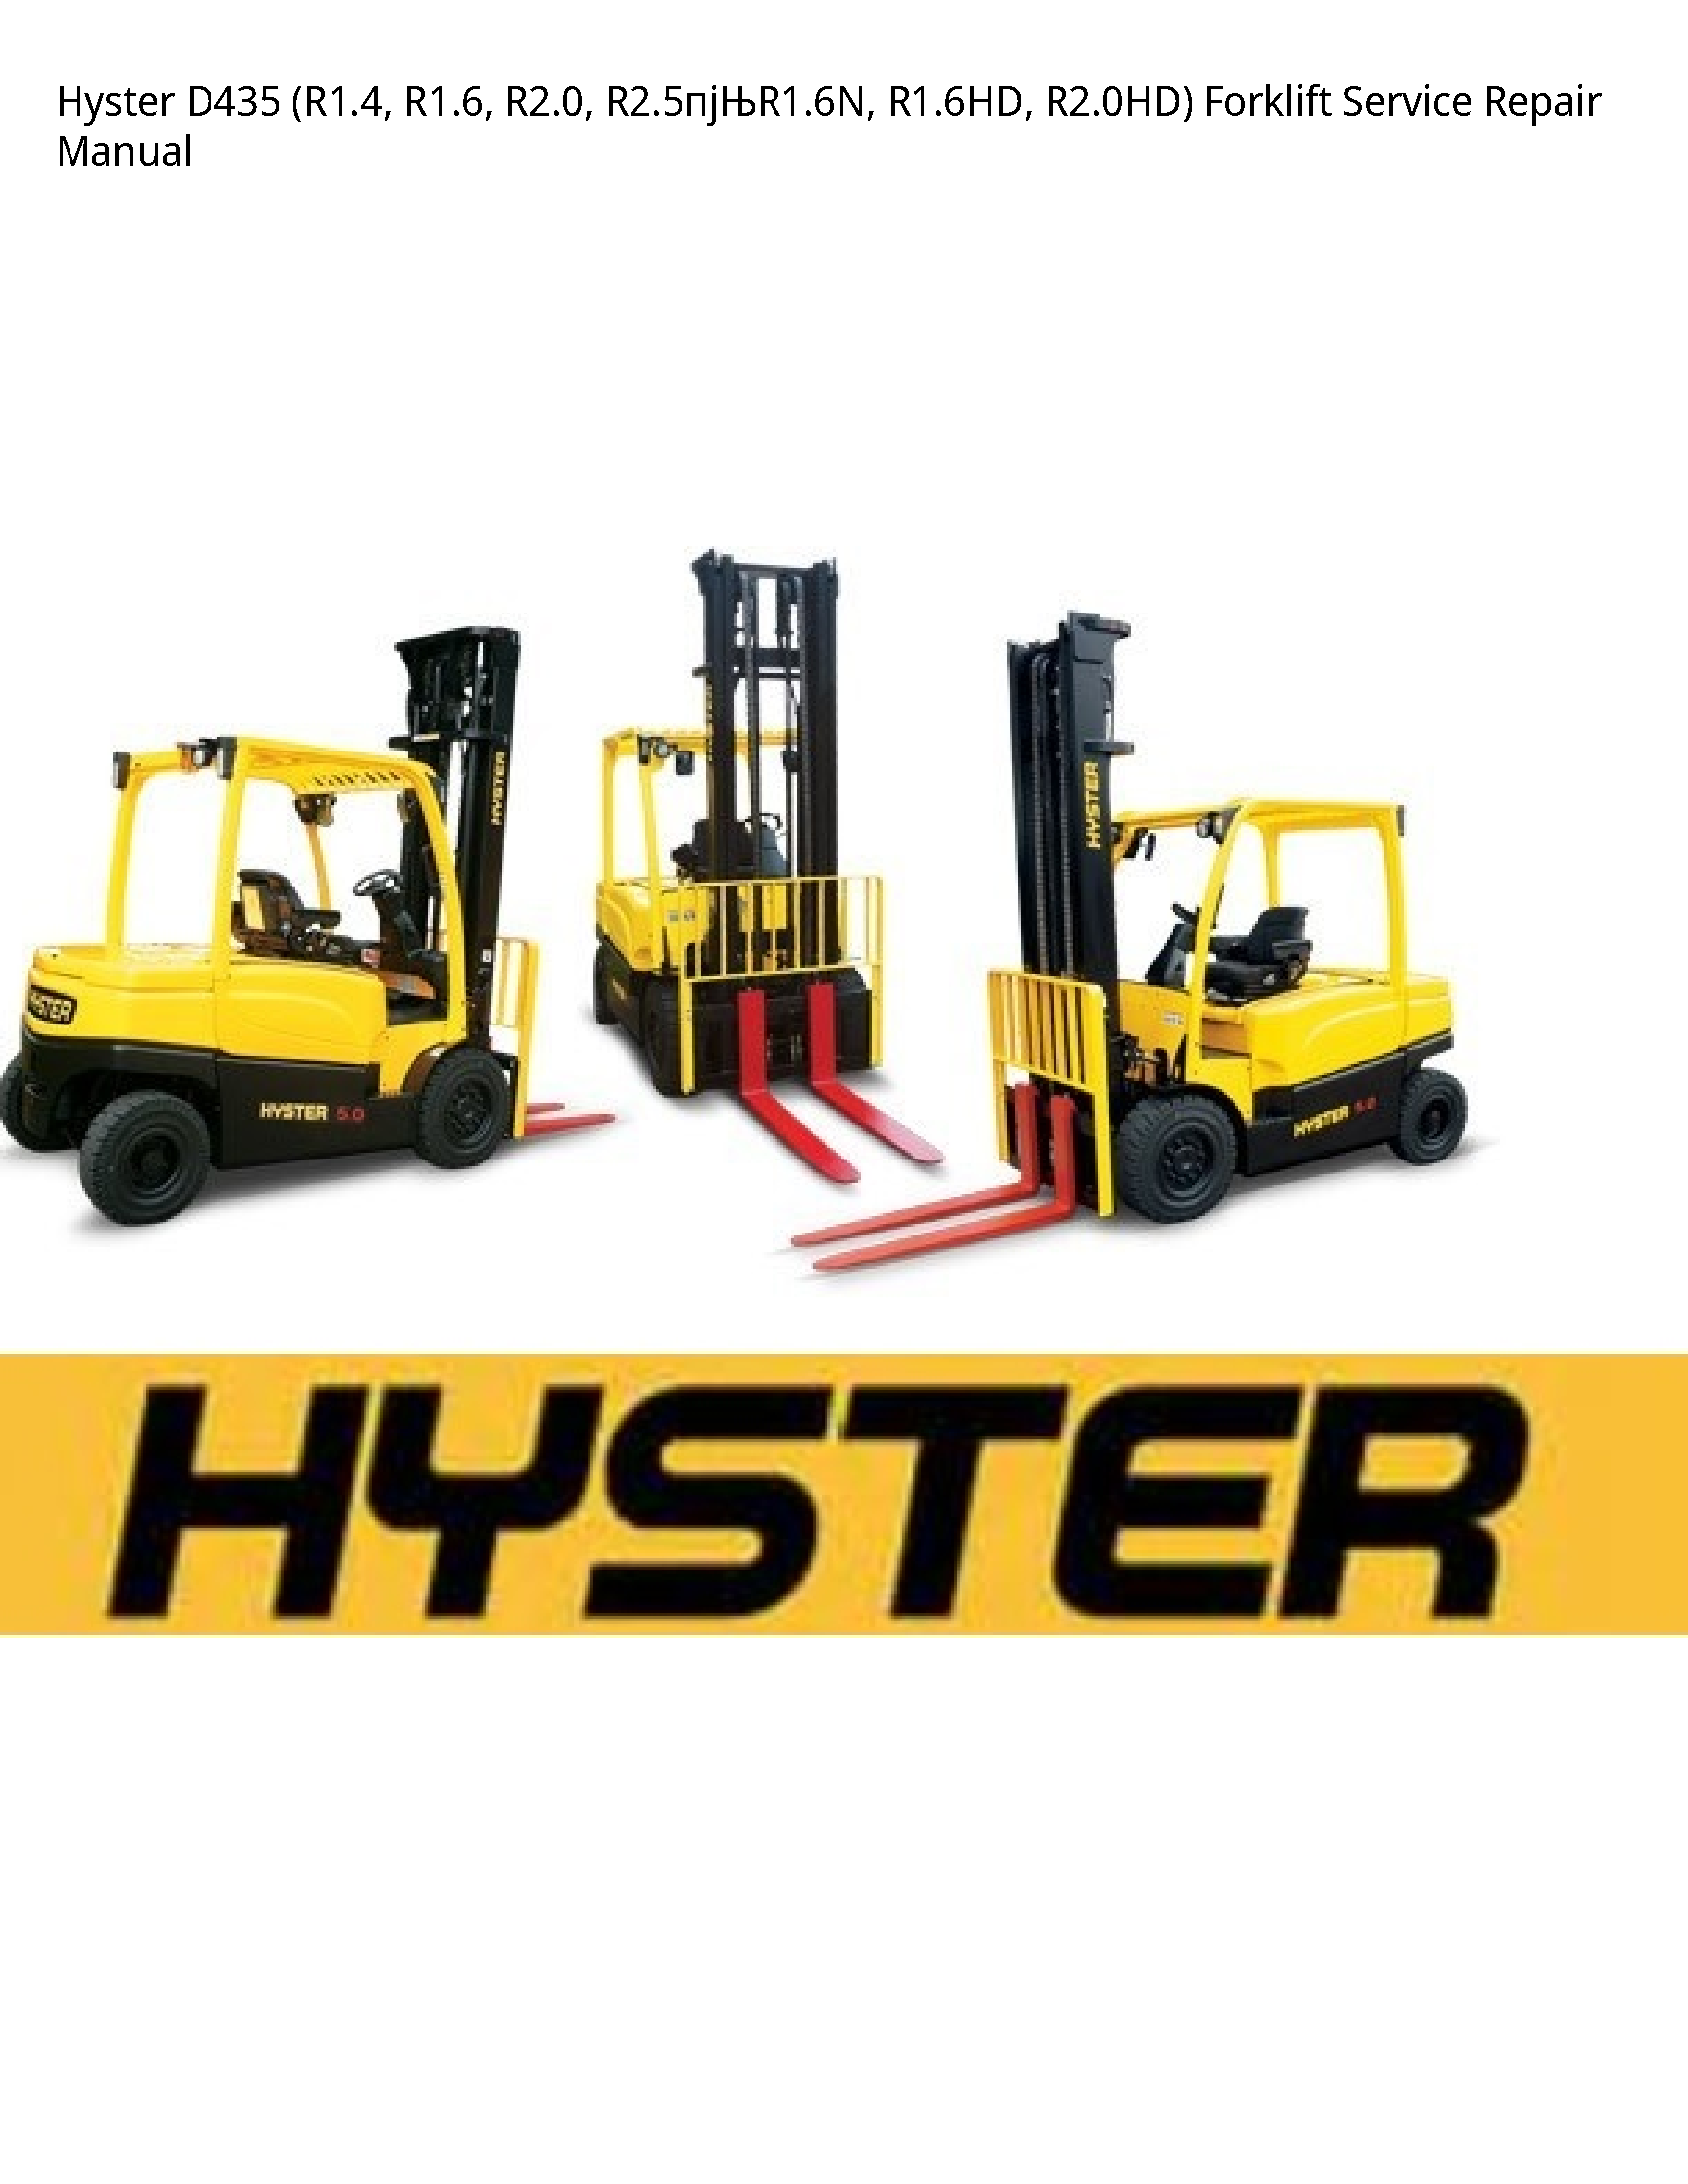 Hyster D435 Forklift manual